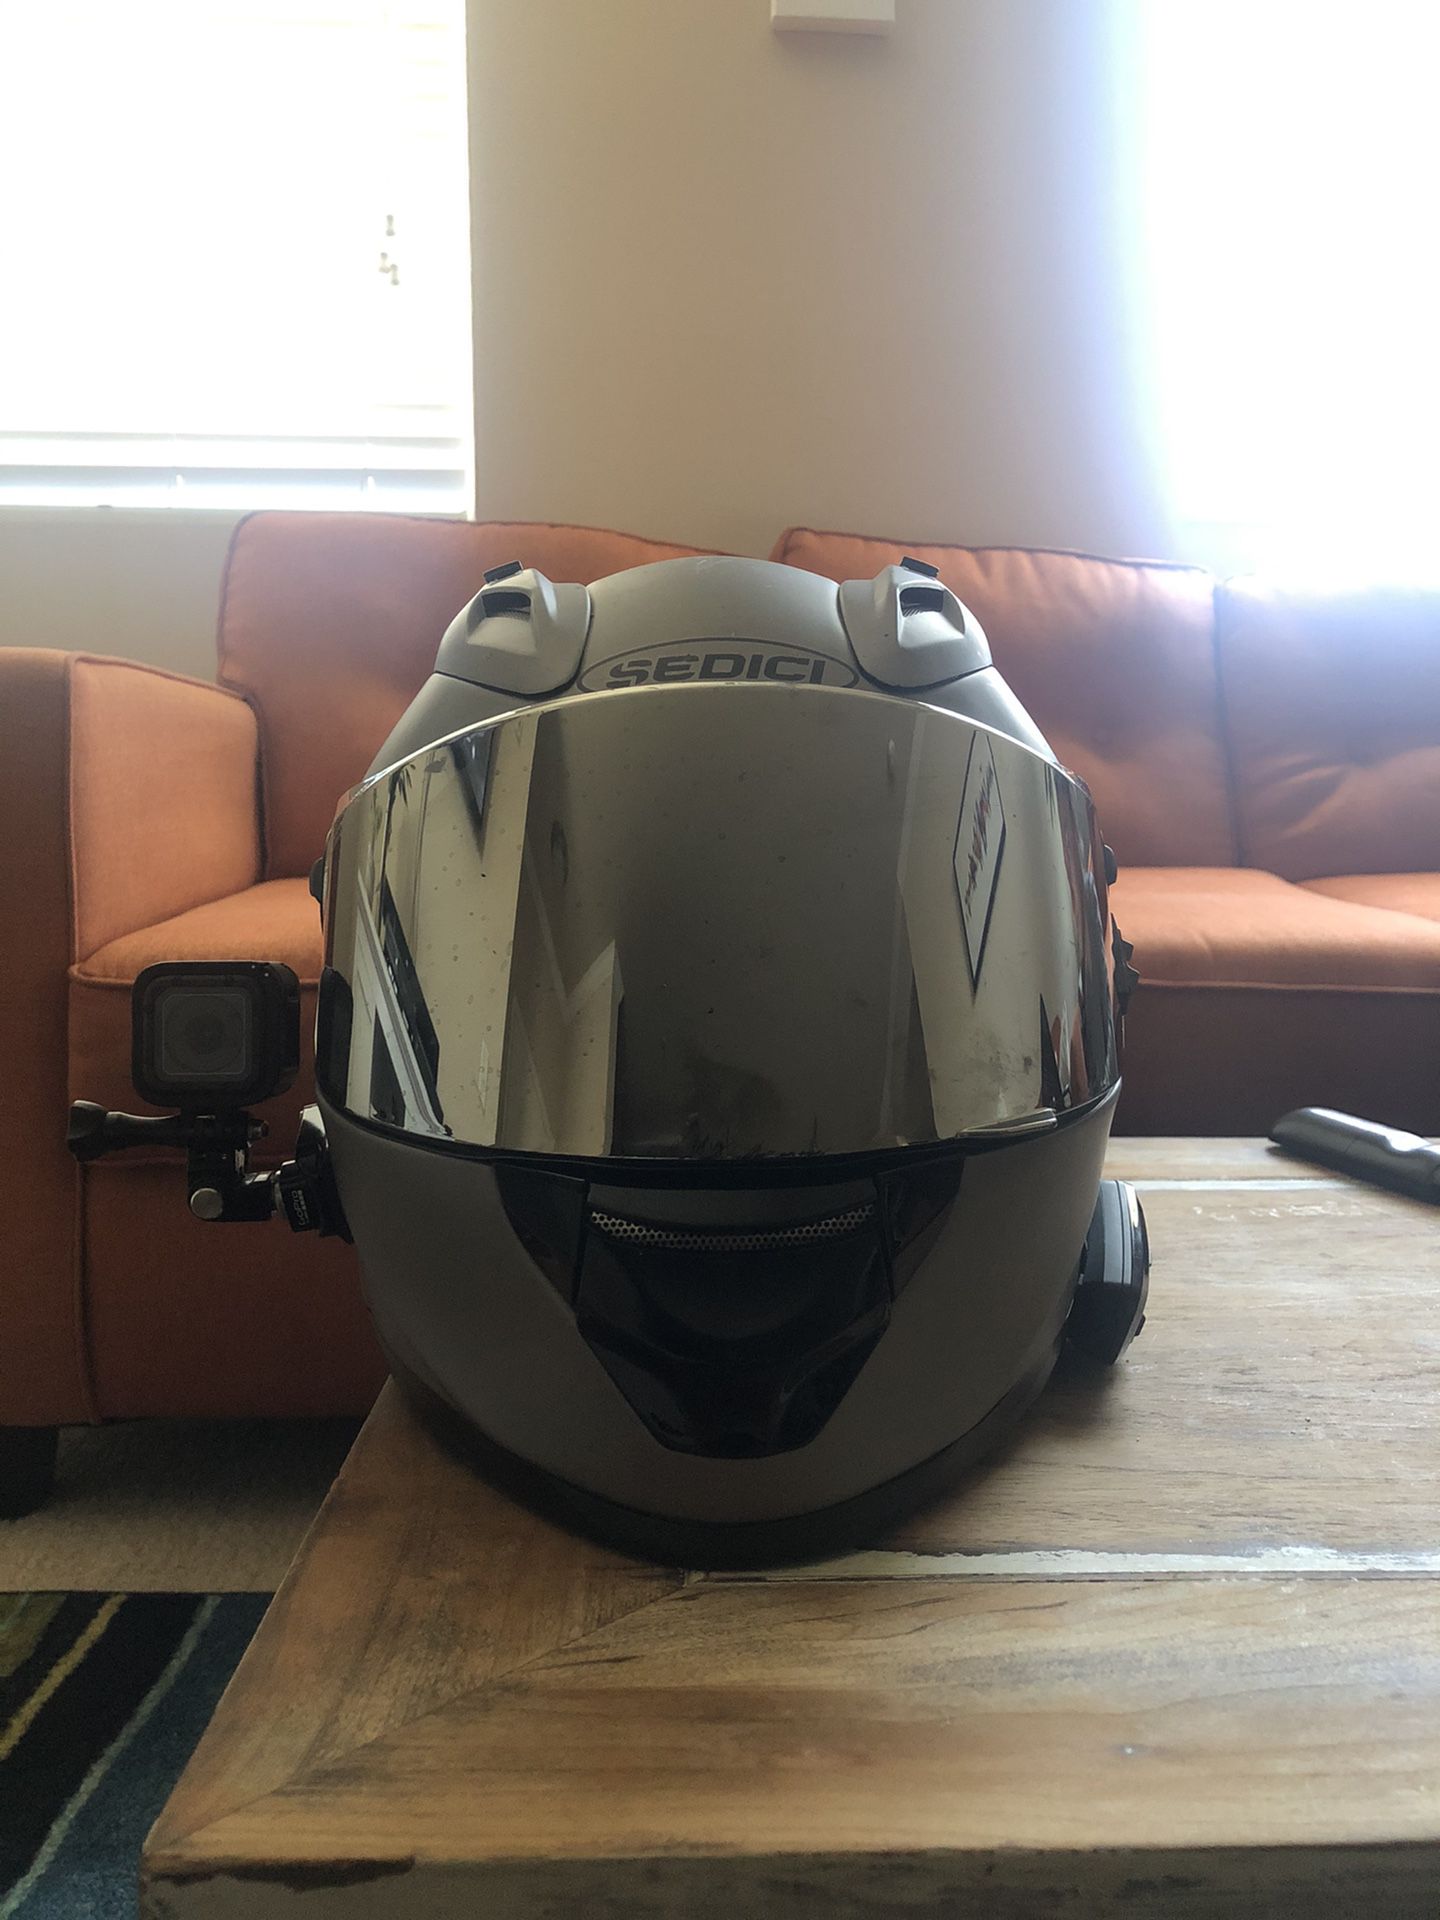 Small Sedici strada motorcycle helmet/Cardo freecom 4+ Bluetooth